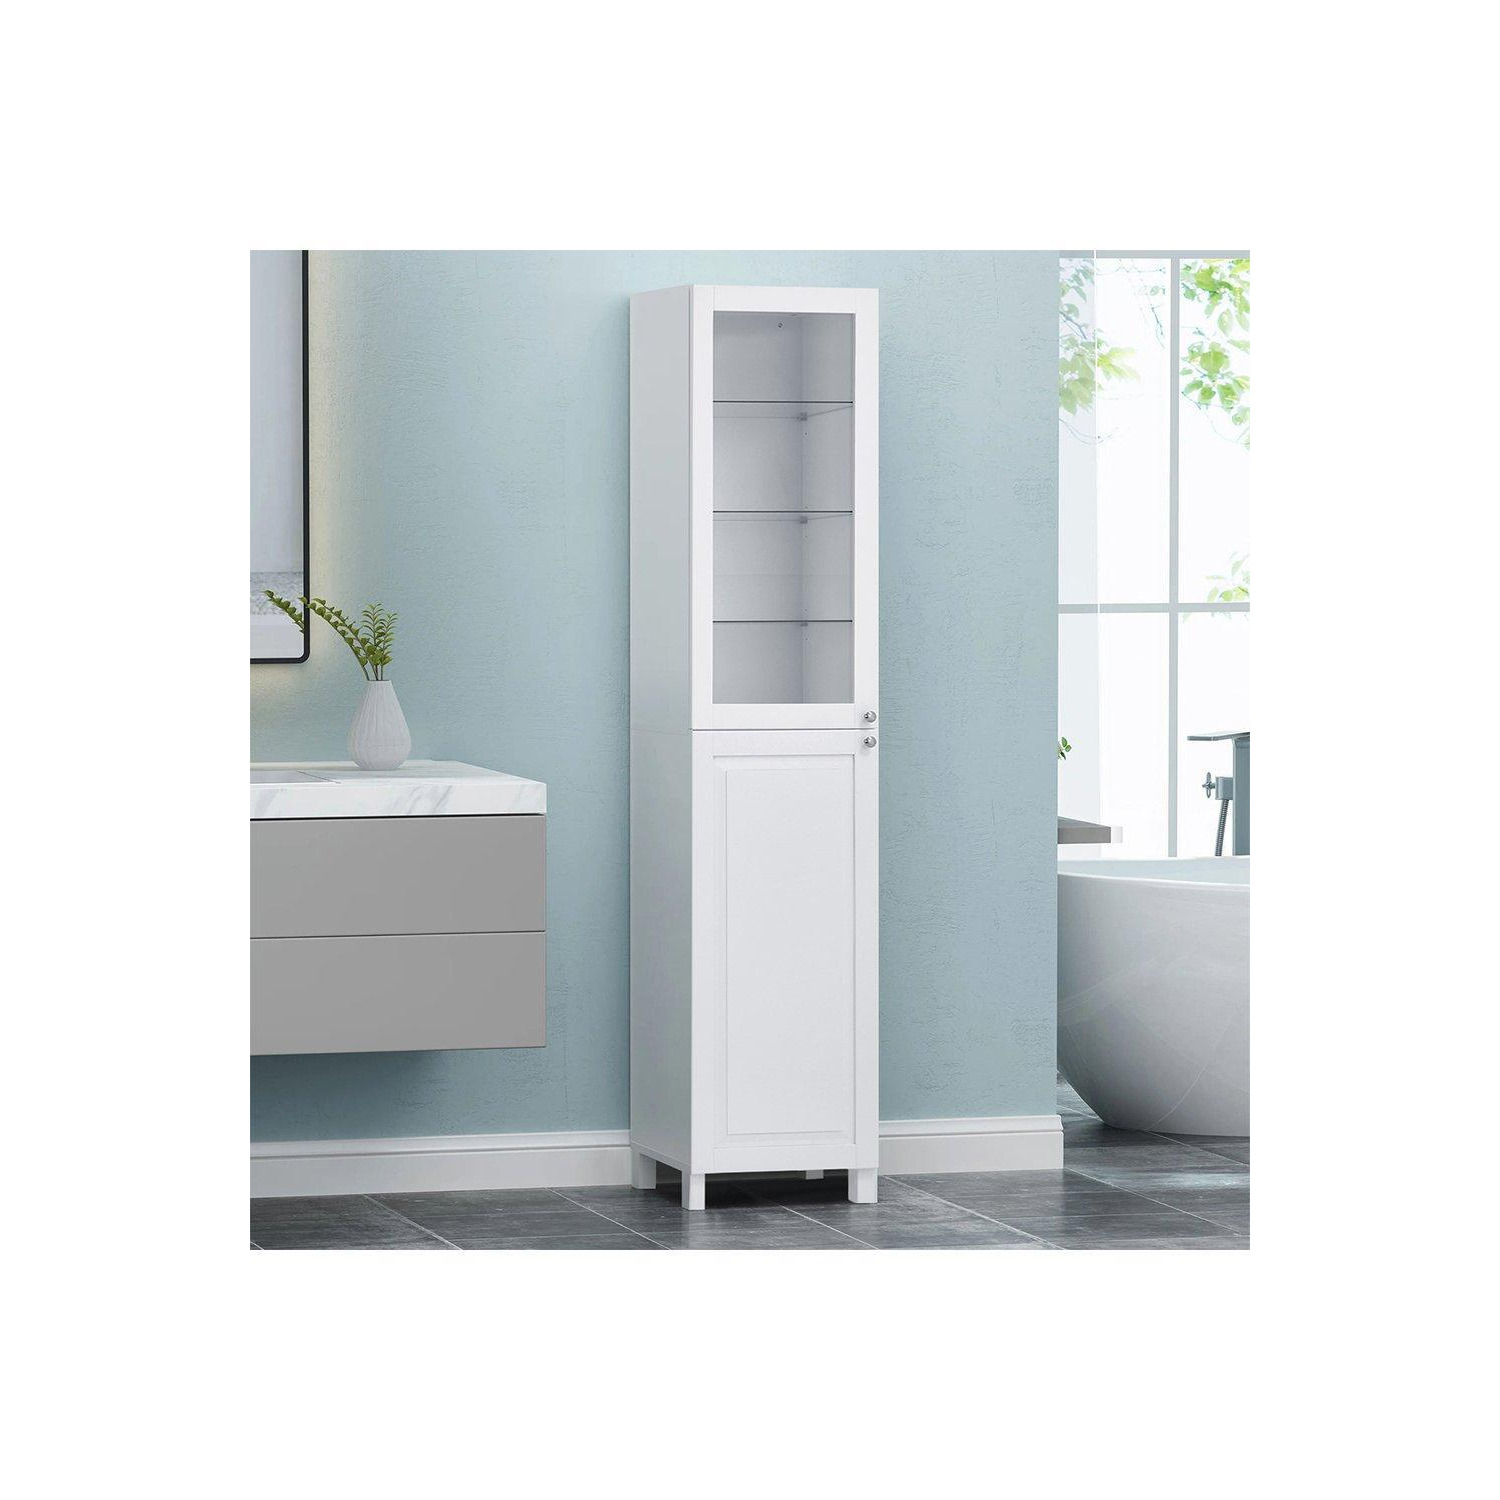 White 2-Door Tall Bathroom Cabinet - image 1